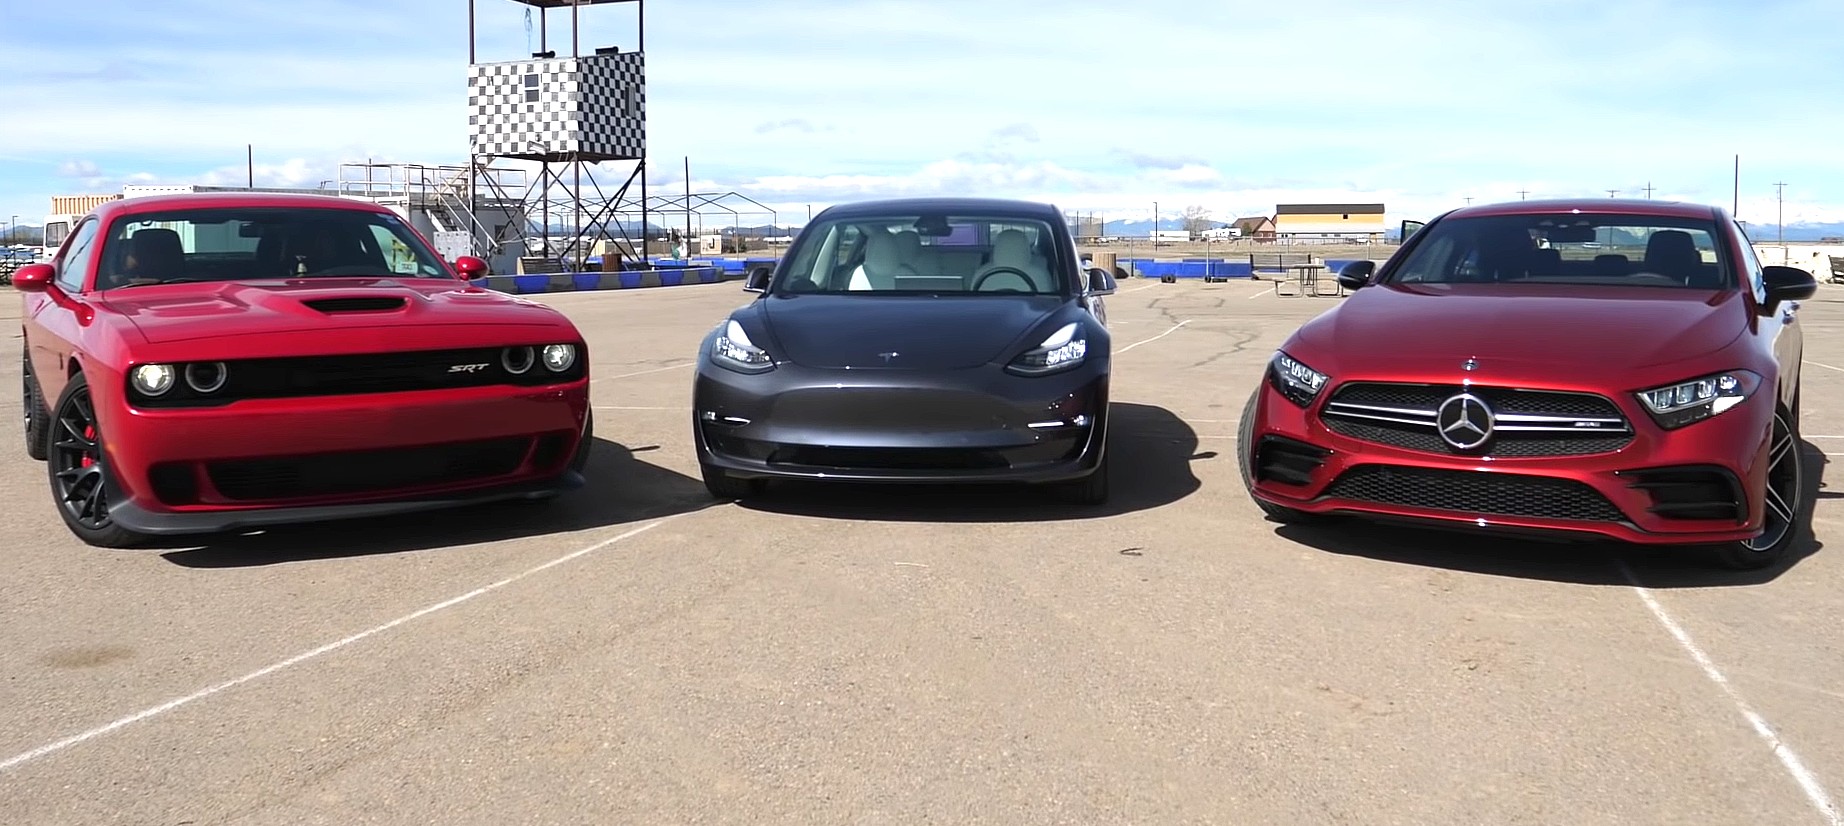 Tesla Model 3 slays Dodge Hellcat and Mercedes CLS 53 in drag race